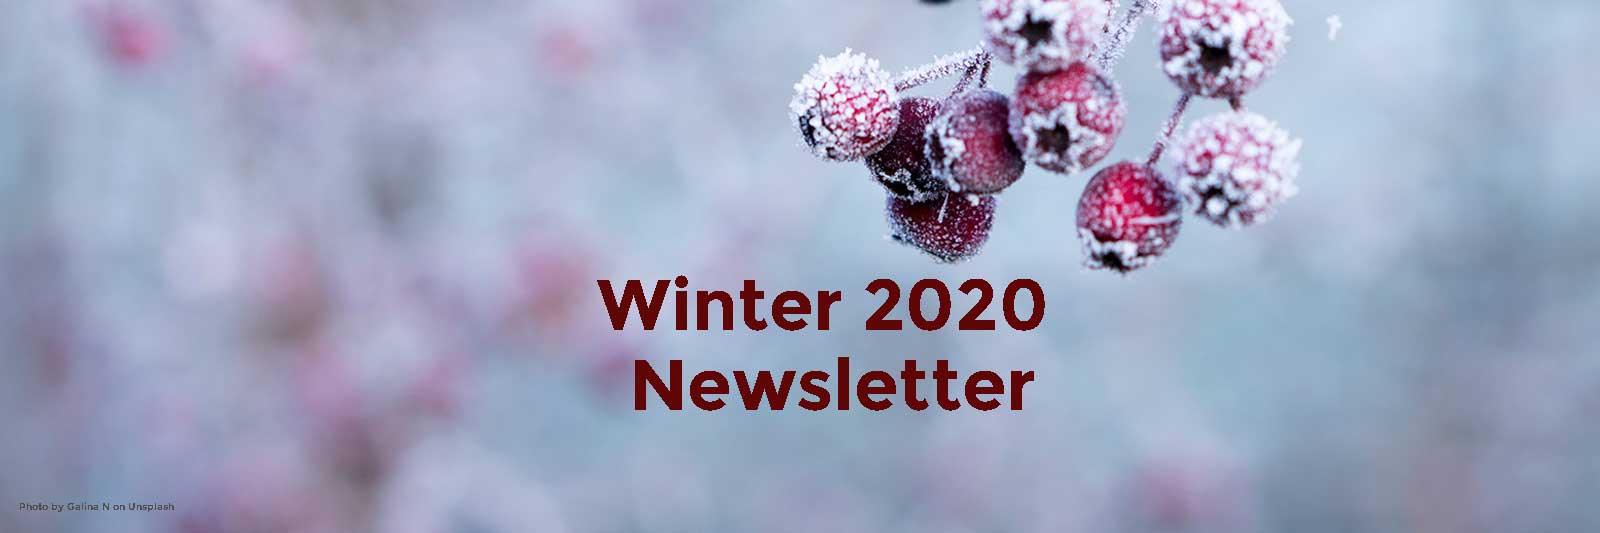 Winter 2020 Newsletter, Cane & Boniface